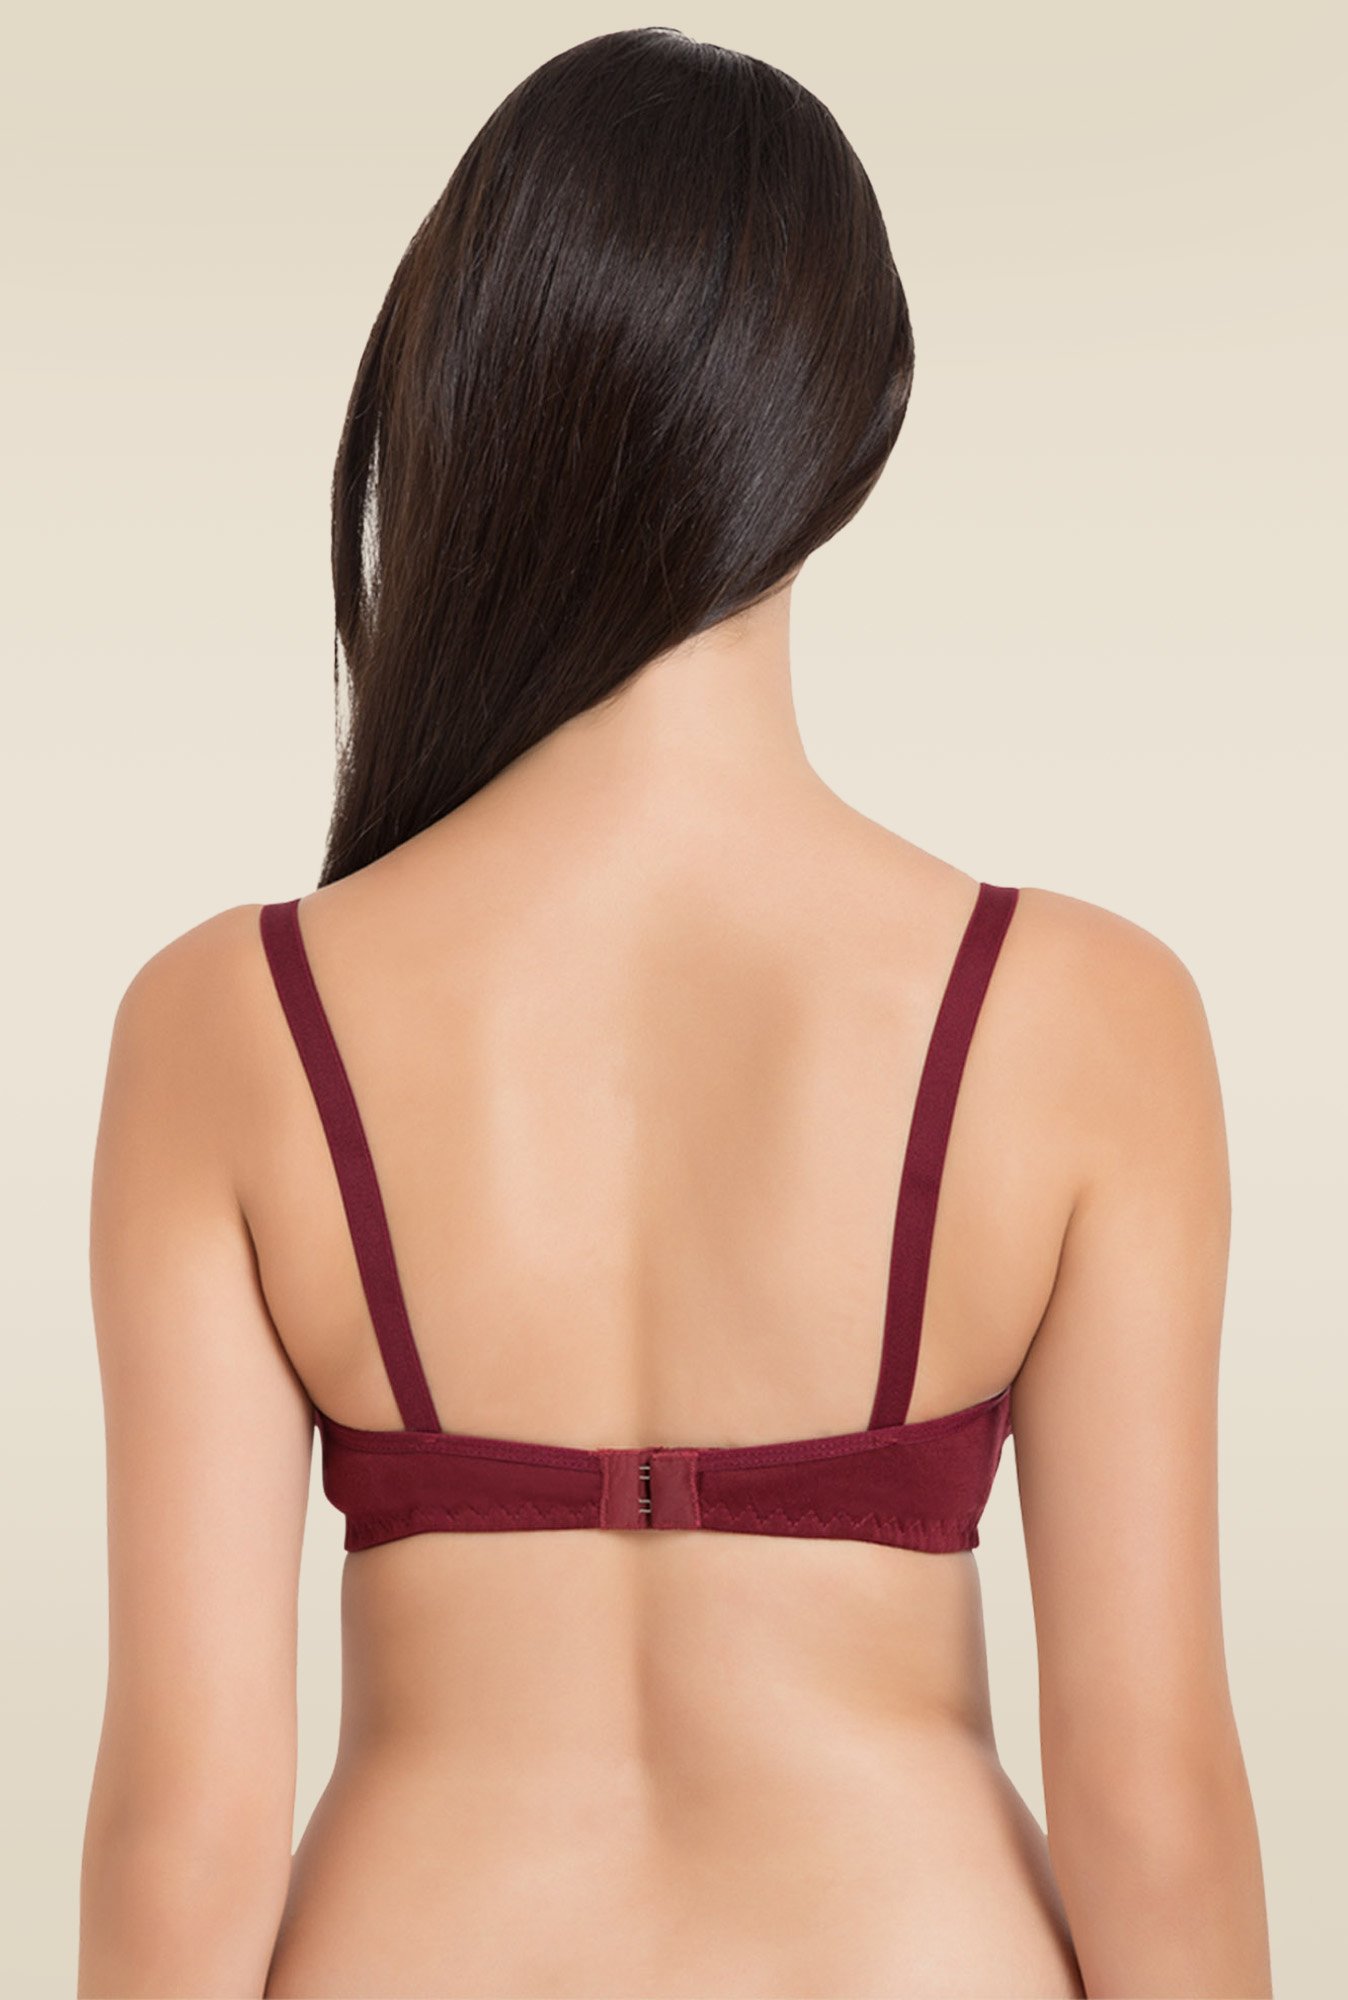 Buy Souminie Maroon Soft Fit Non Padded Bra for Women Online @ Tata CLiQ